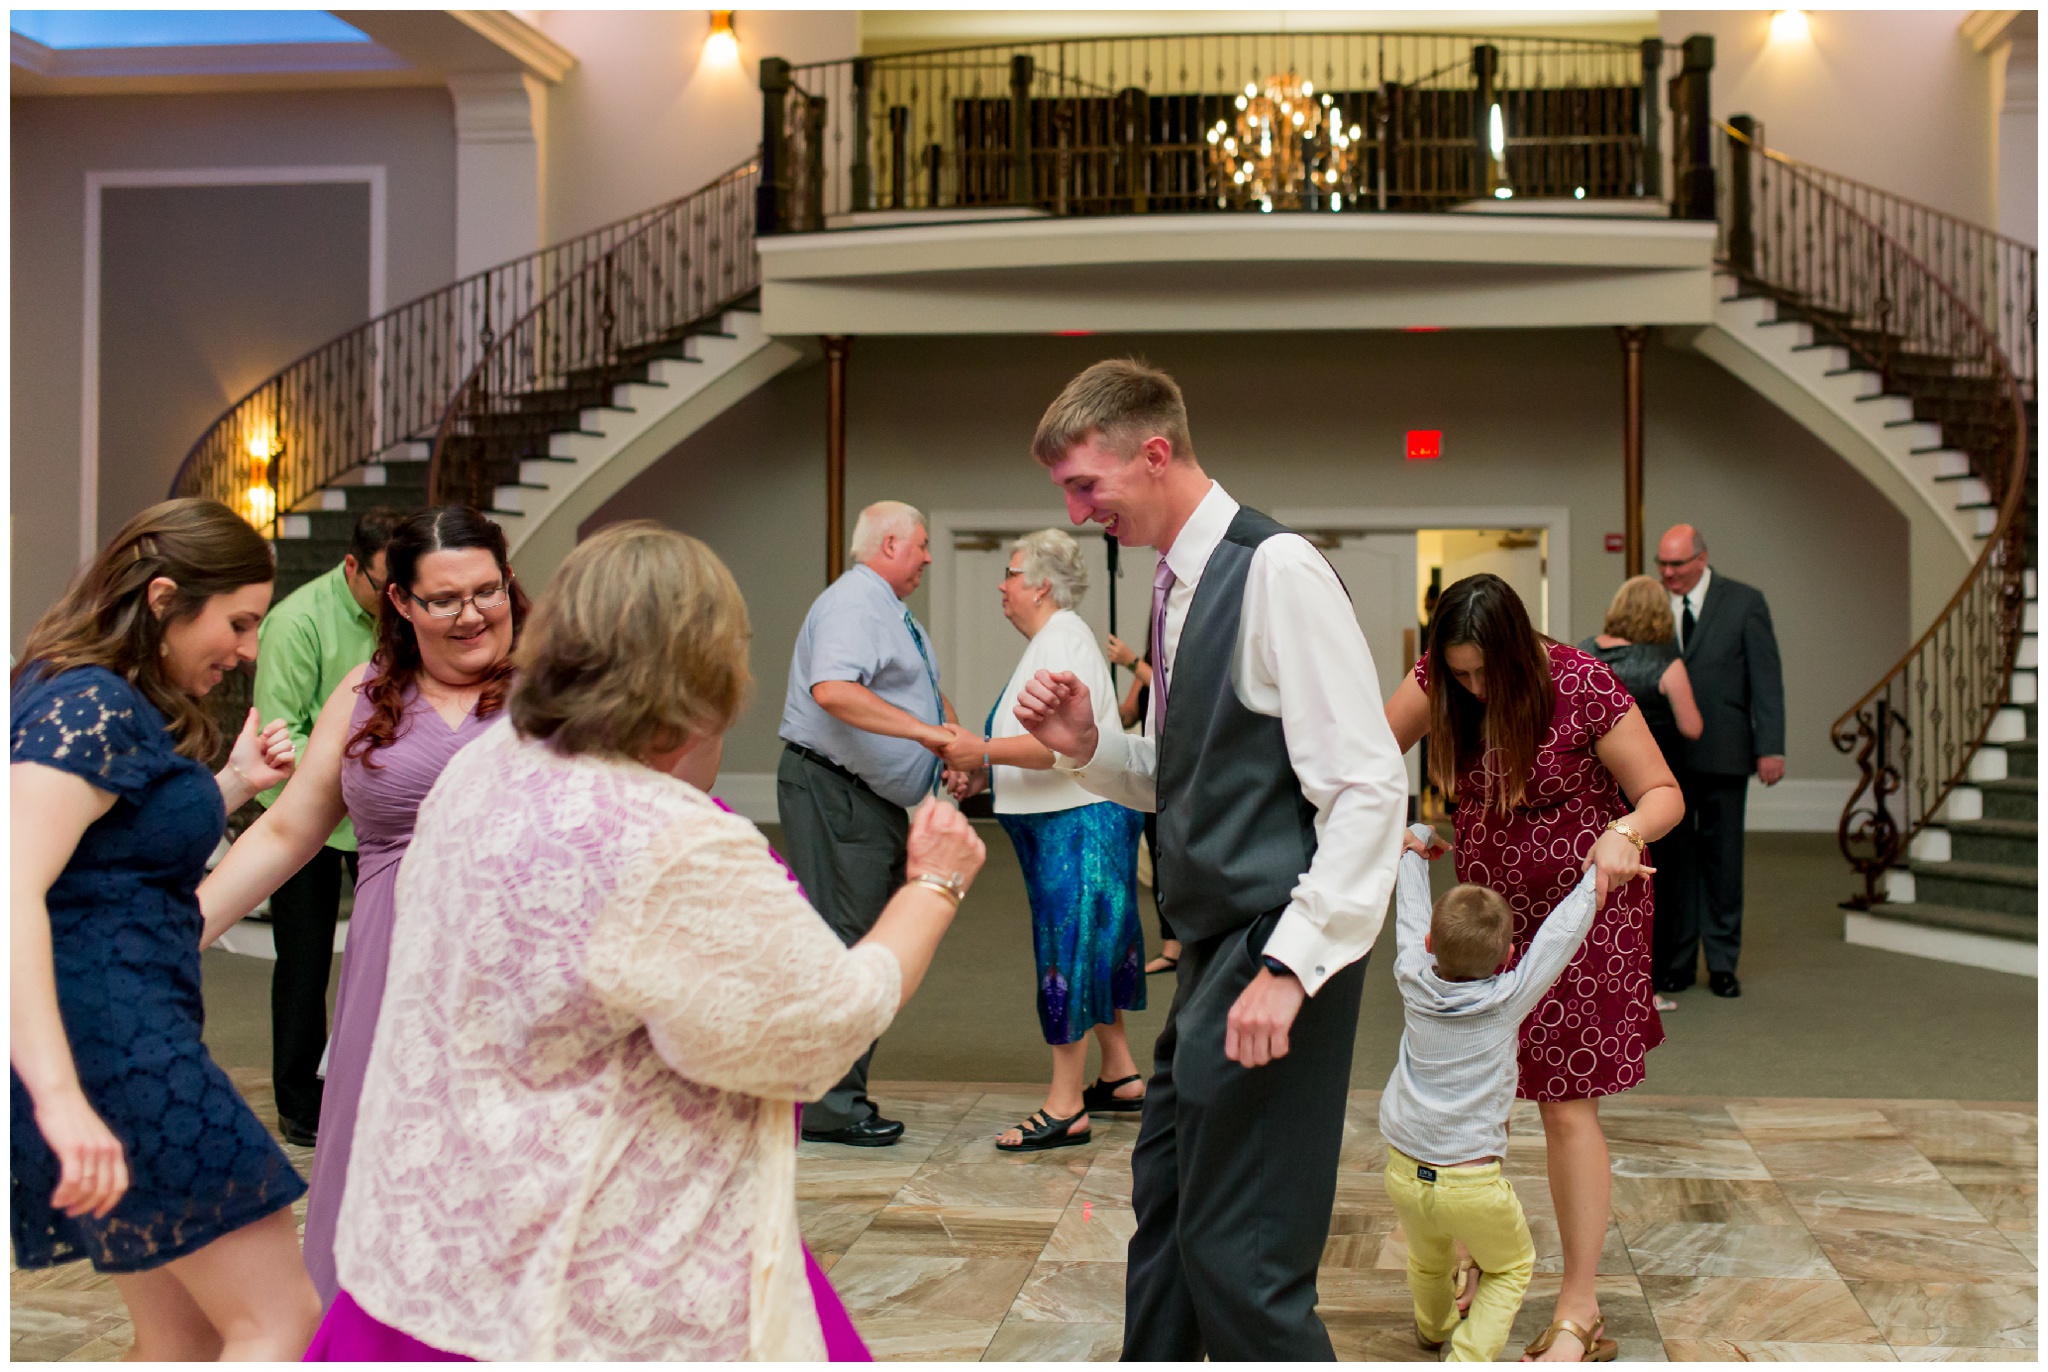 wedding reception guests dancing at Bel Air Events in Kokomo Indiana